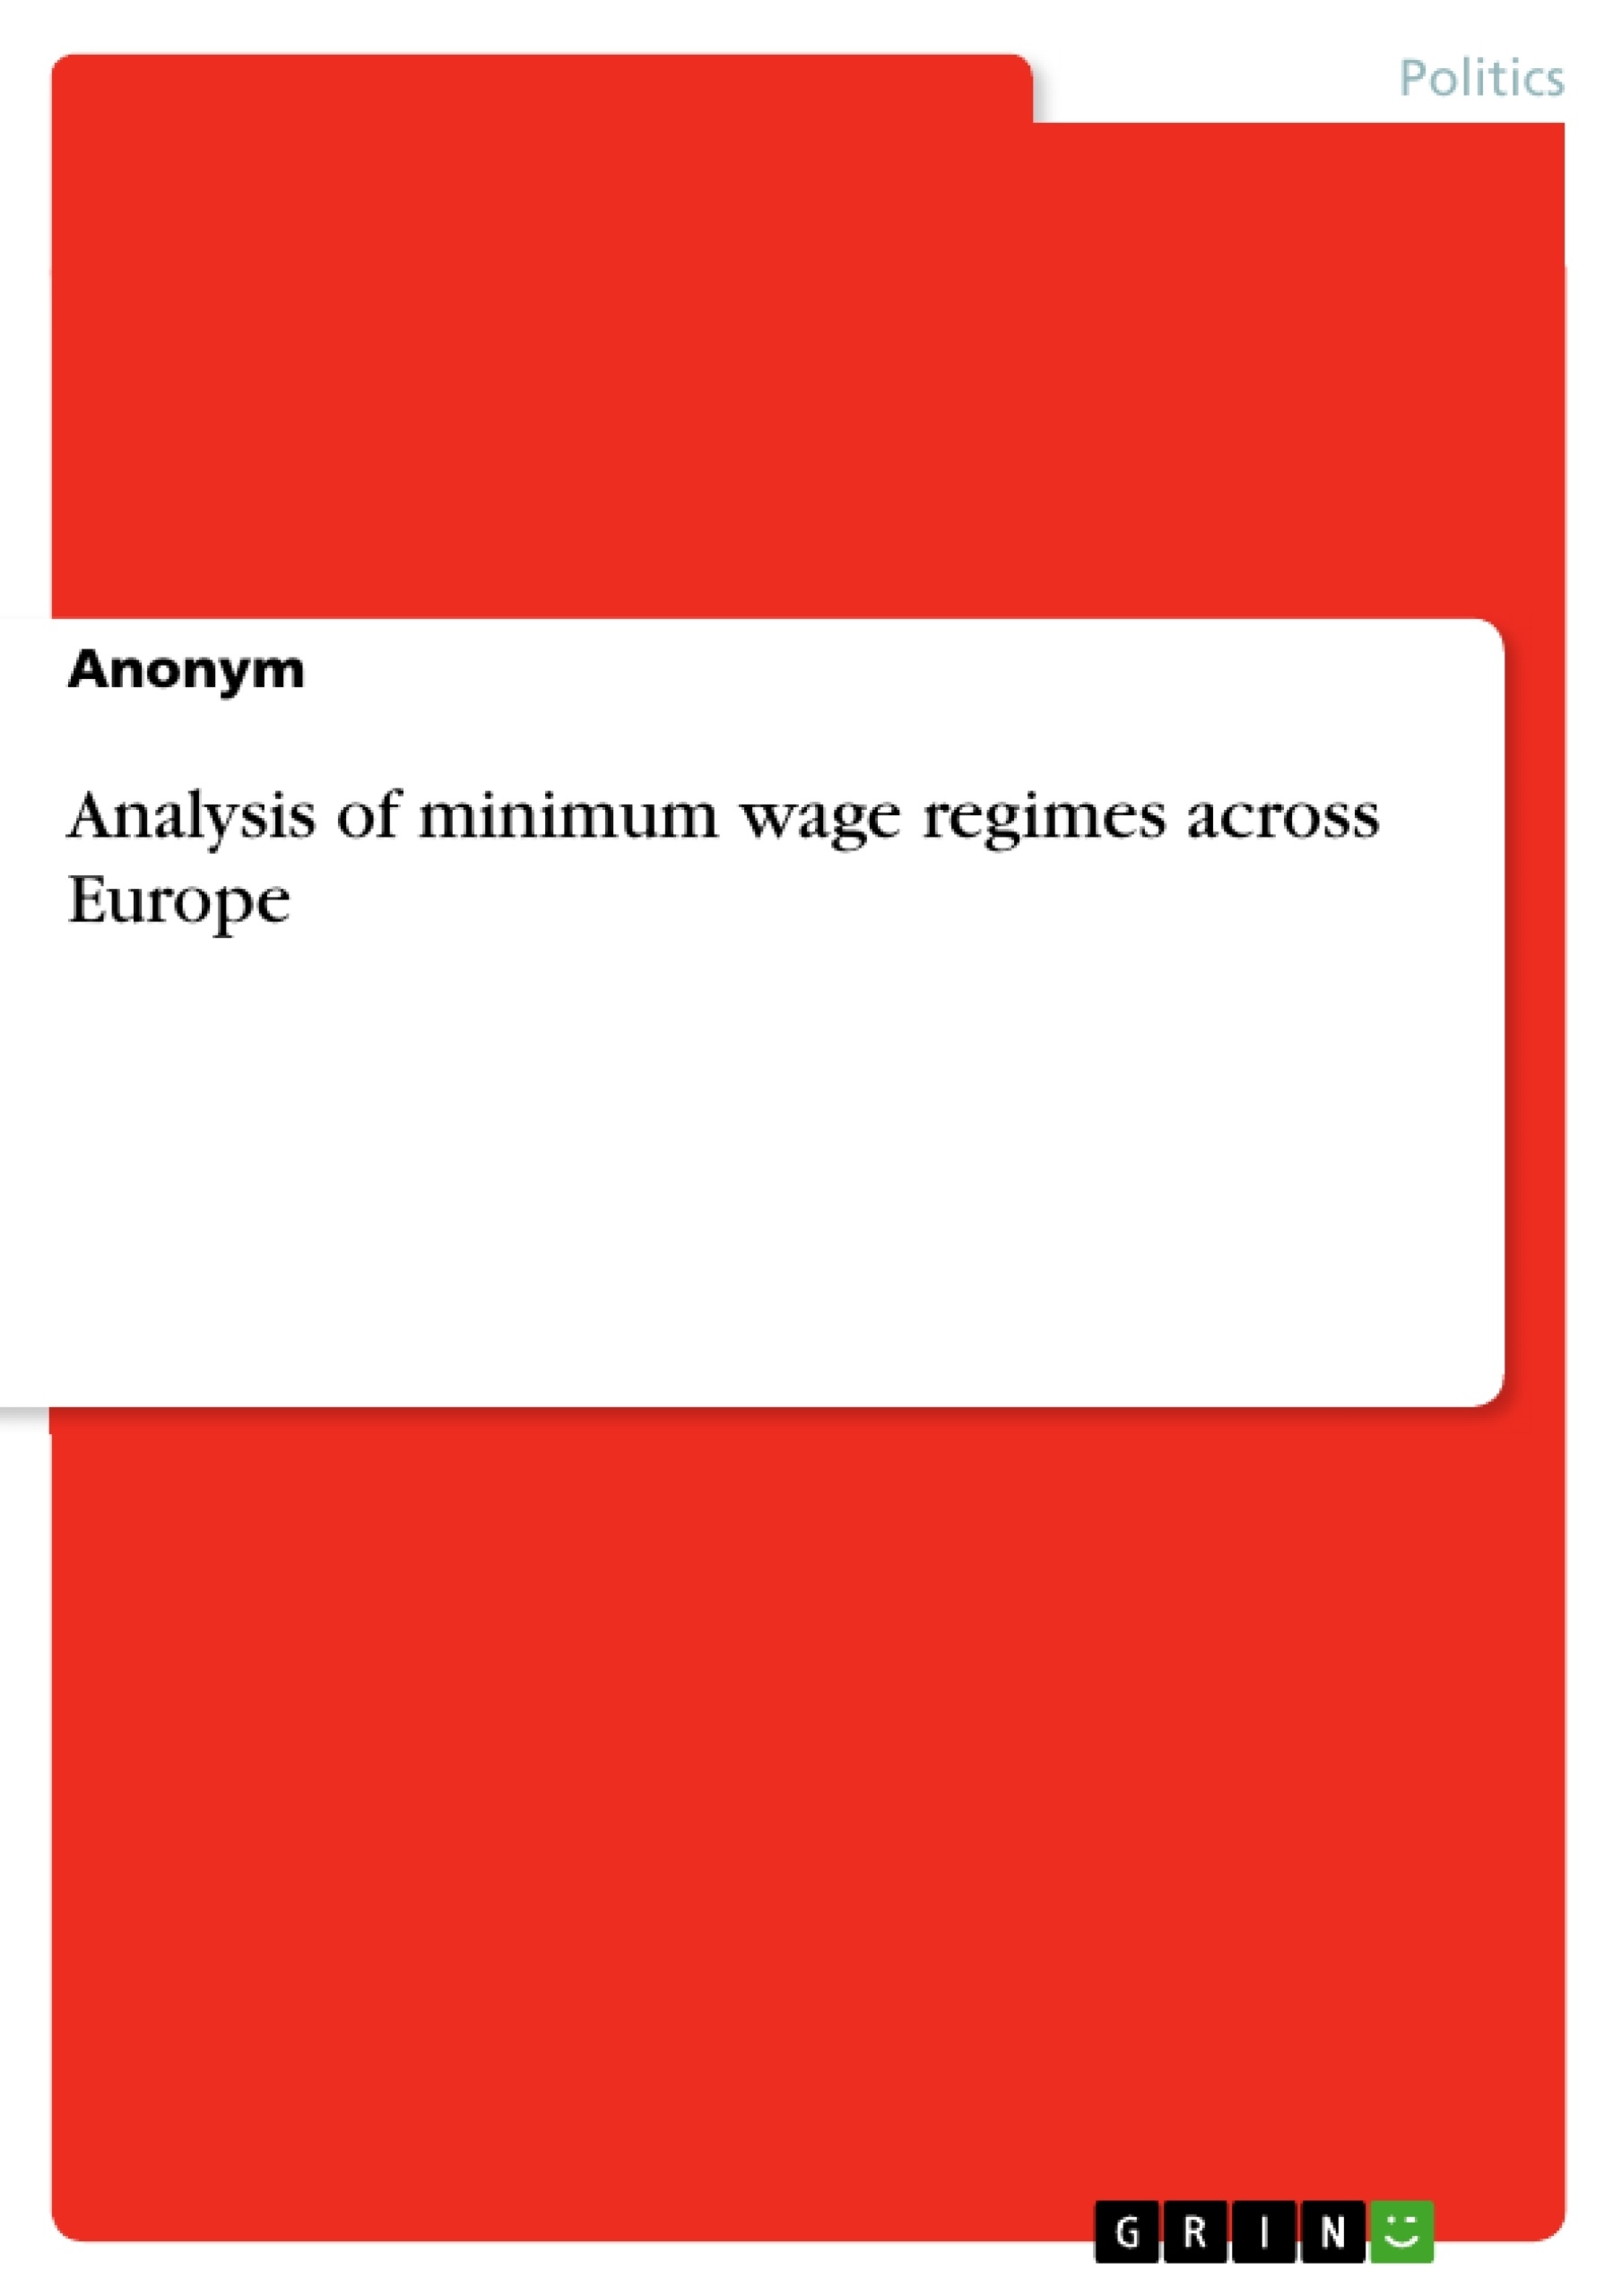 Title: Analysis of minimum wage regimes across Europe